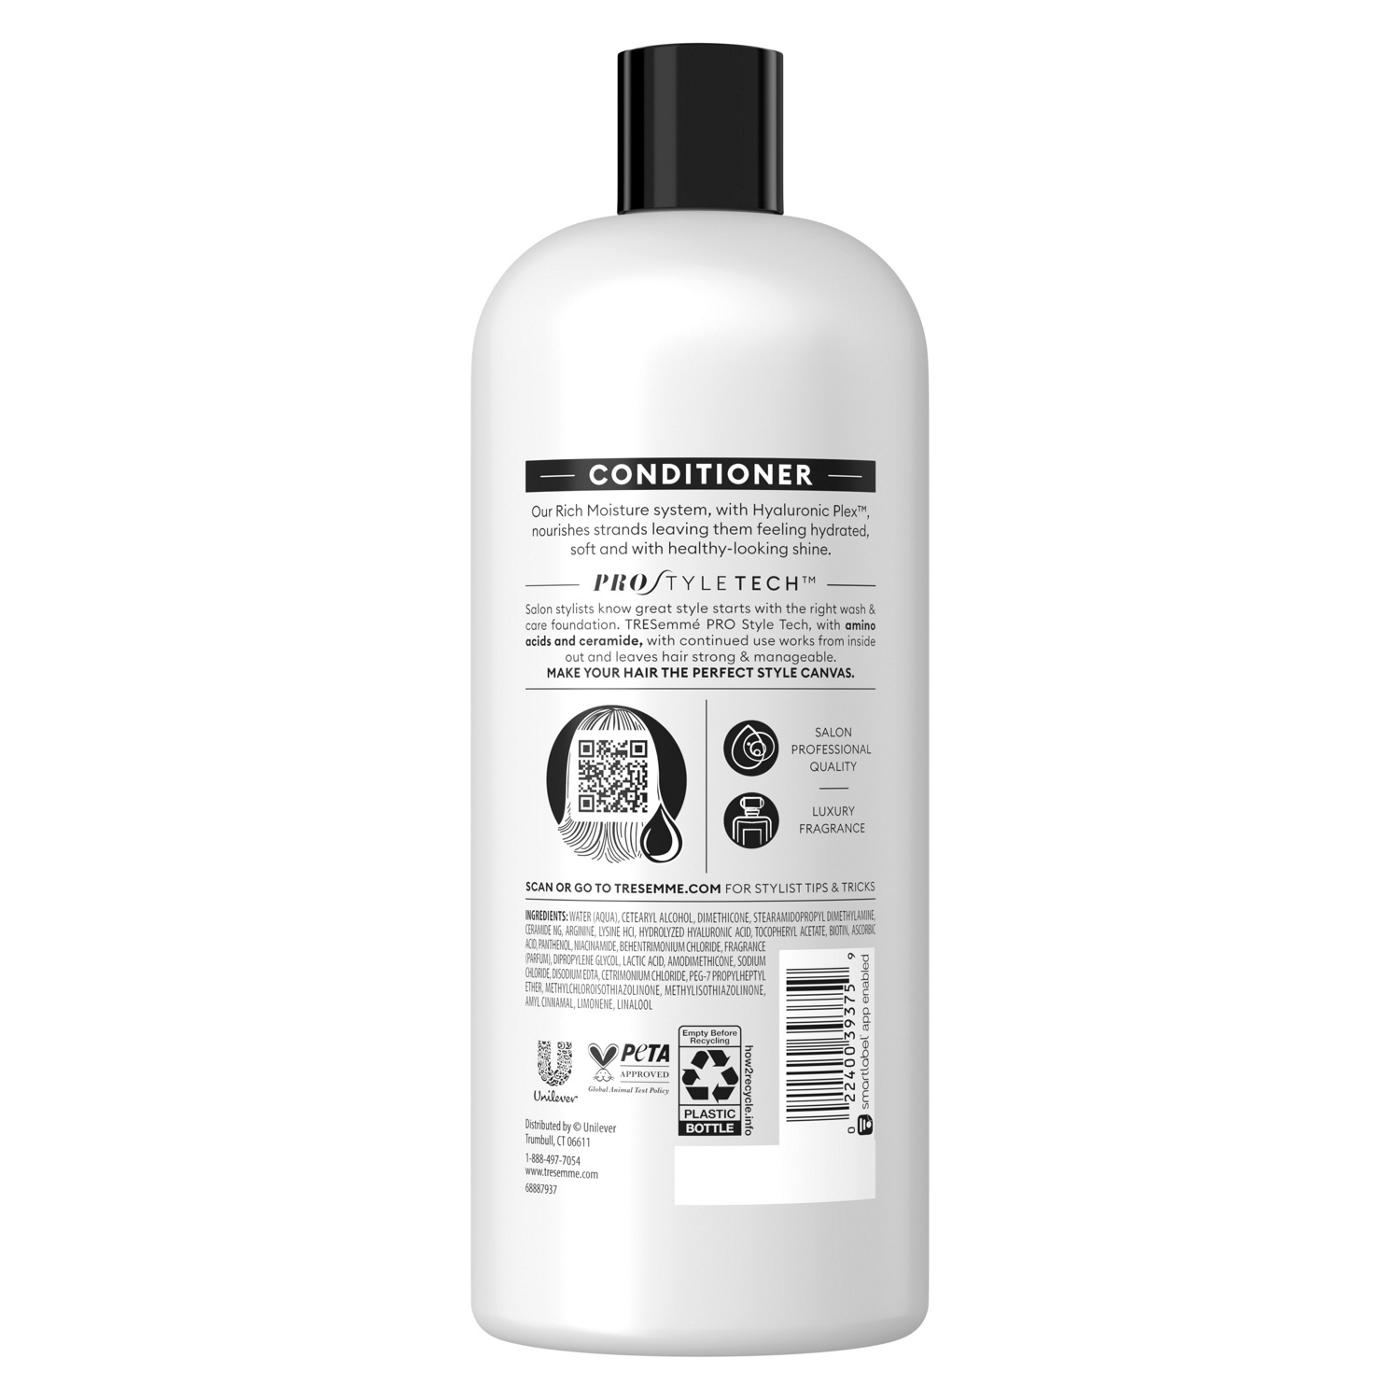 Stor vrangforestilling Jonglere positur TRESemmé Rich Moisture Conditioner - Shop Shampoo & Conditioner at H-E-B